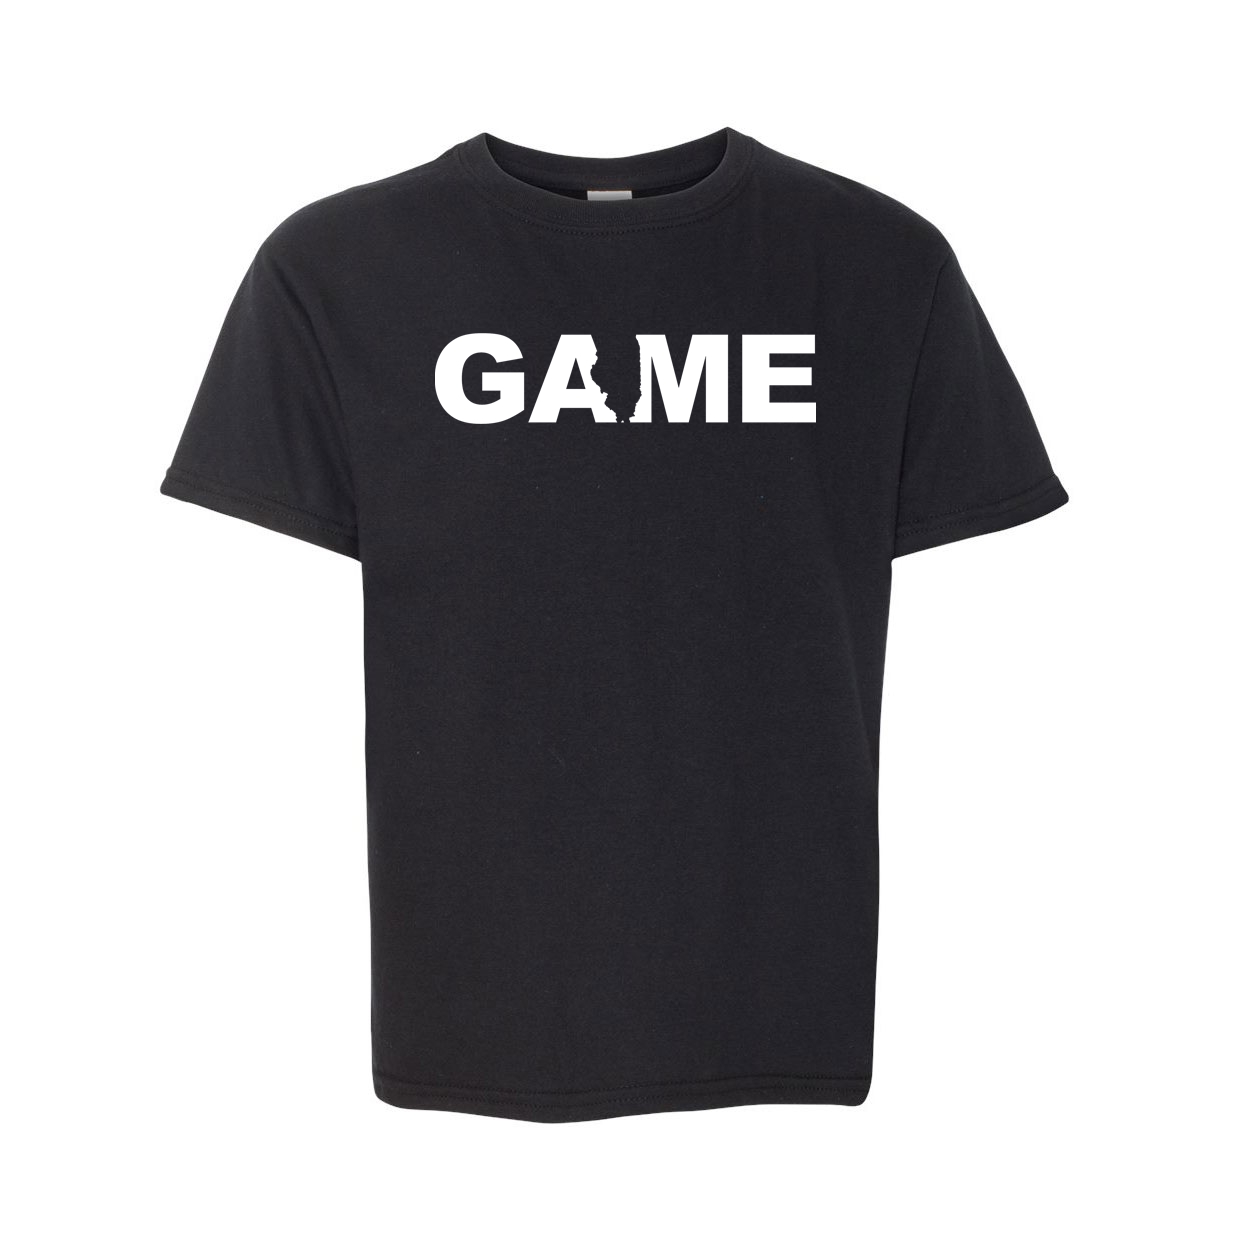 Game Illinois Classic Youth T-Shirt Black (White Logo)